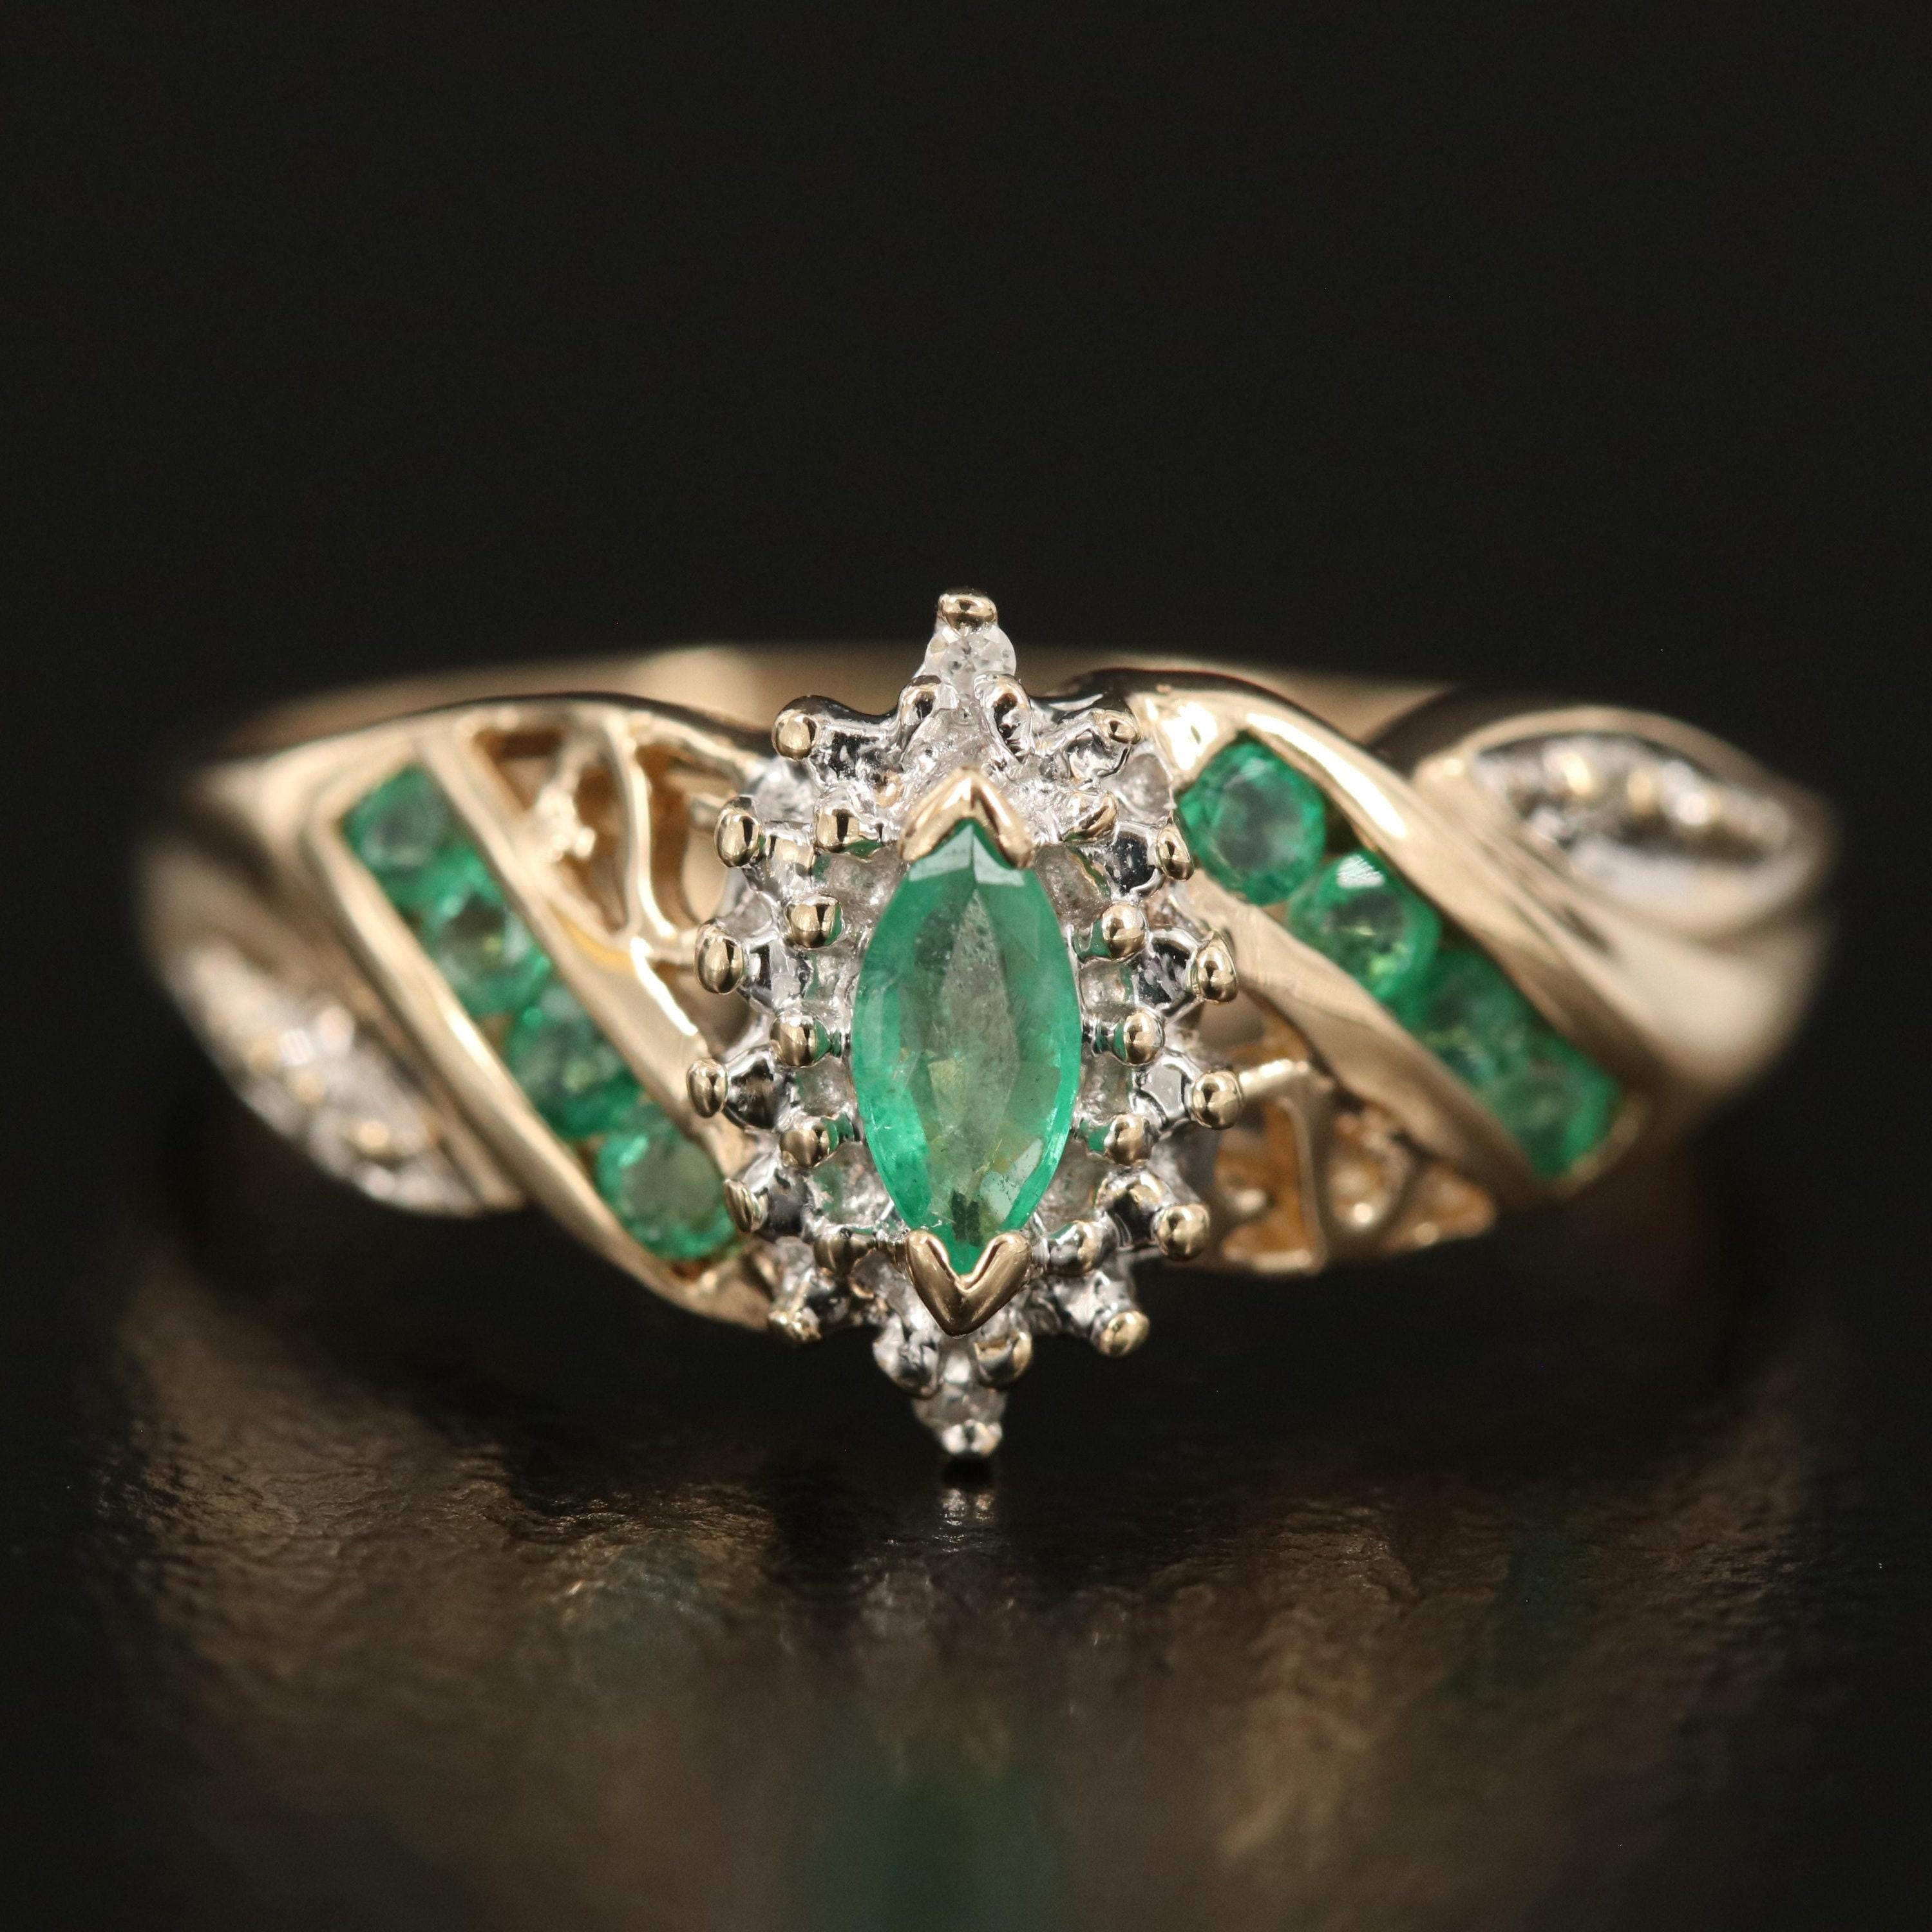 For Sale:  1.5 Carat Marquise Cut Emerald Diamond Bridal Ring Diamond Emerald Cocktail Ring 7